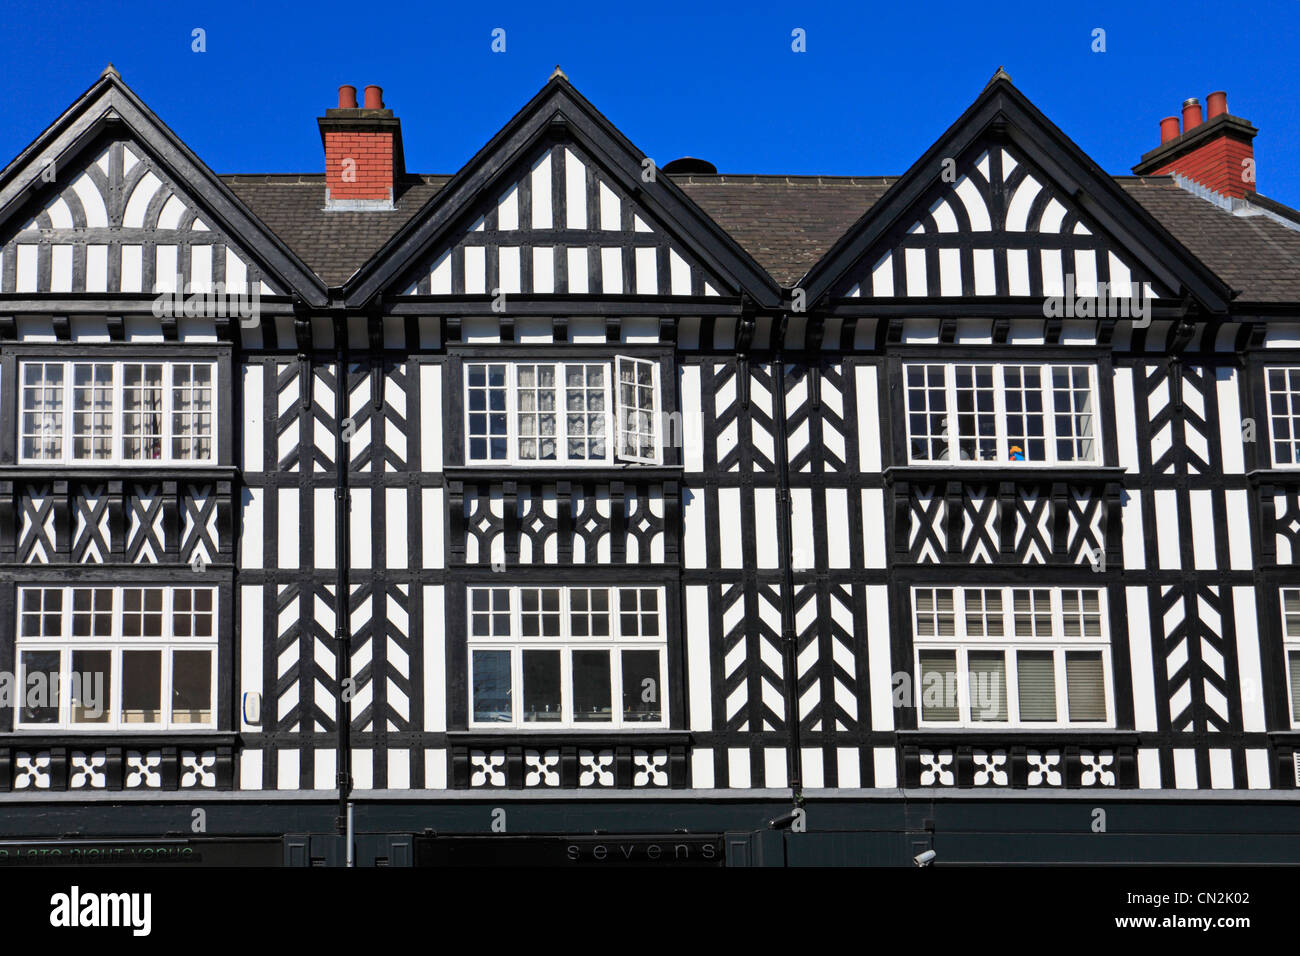 Mock tudor half timber buildings in Chesterfield, Derbyshire, England, UK. Stock Photo